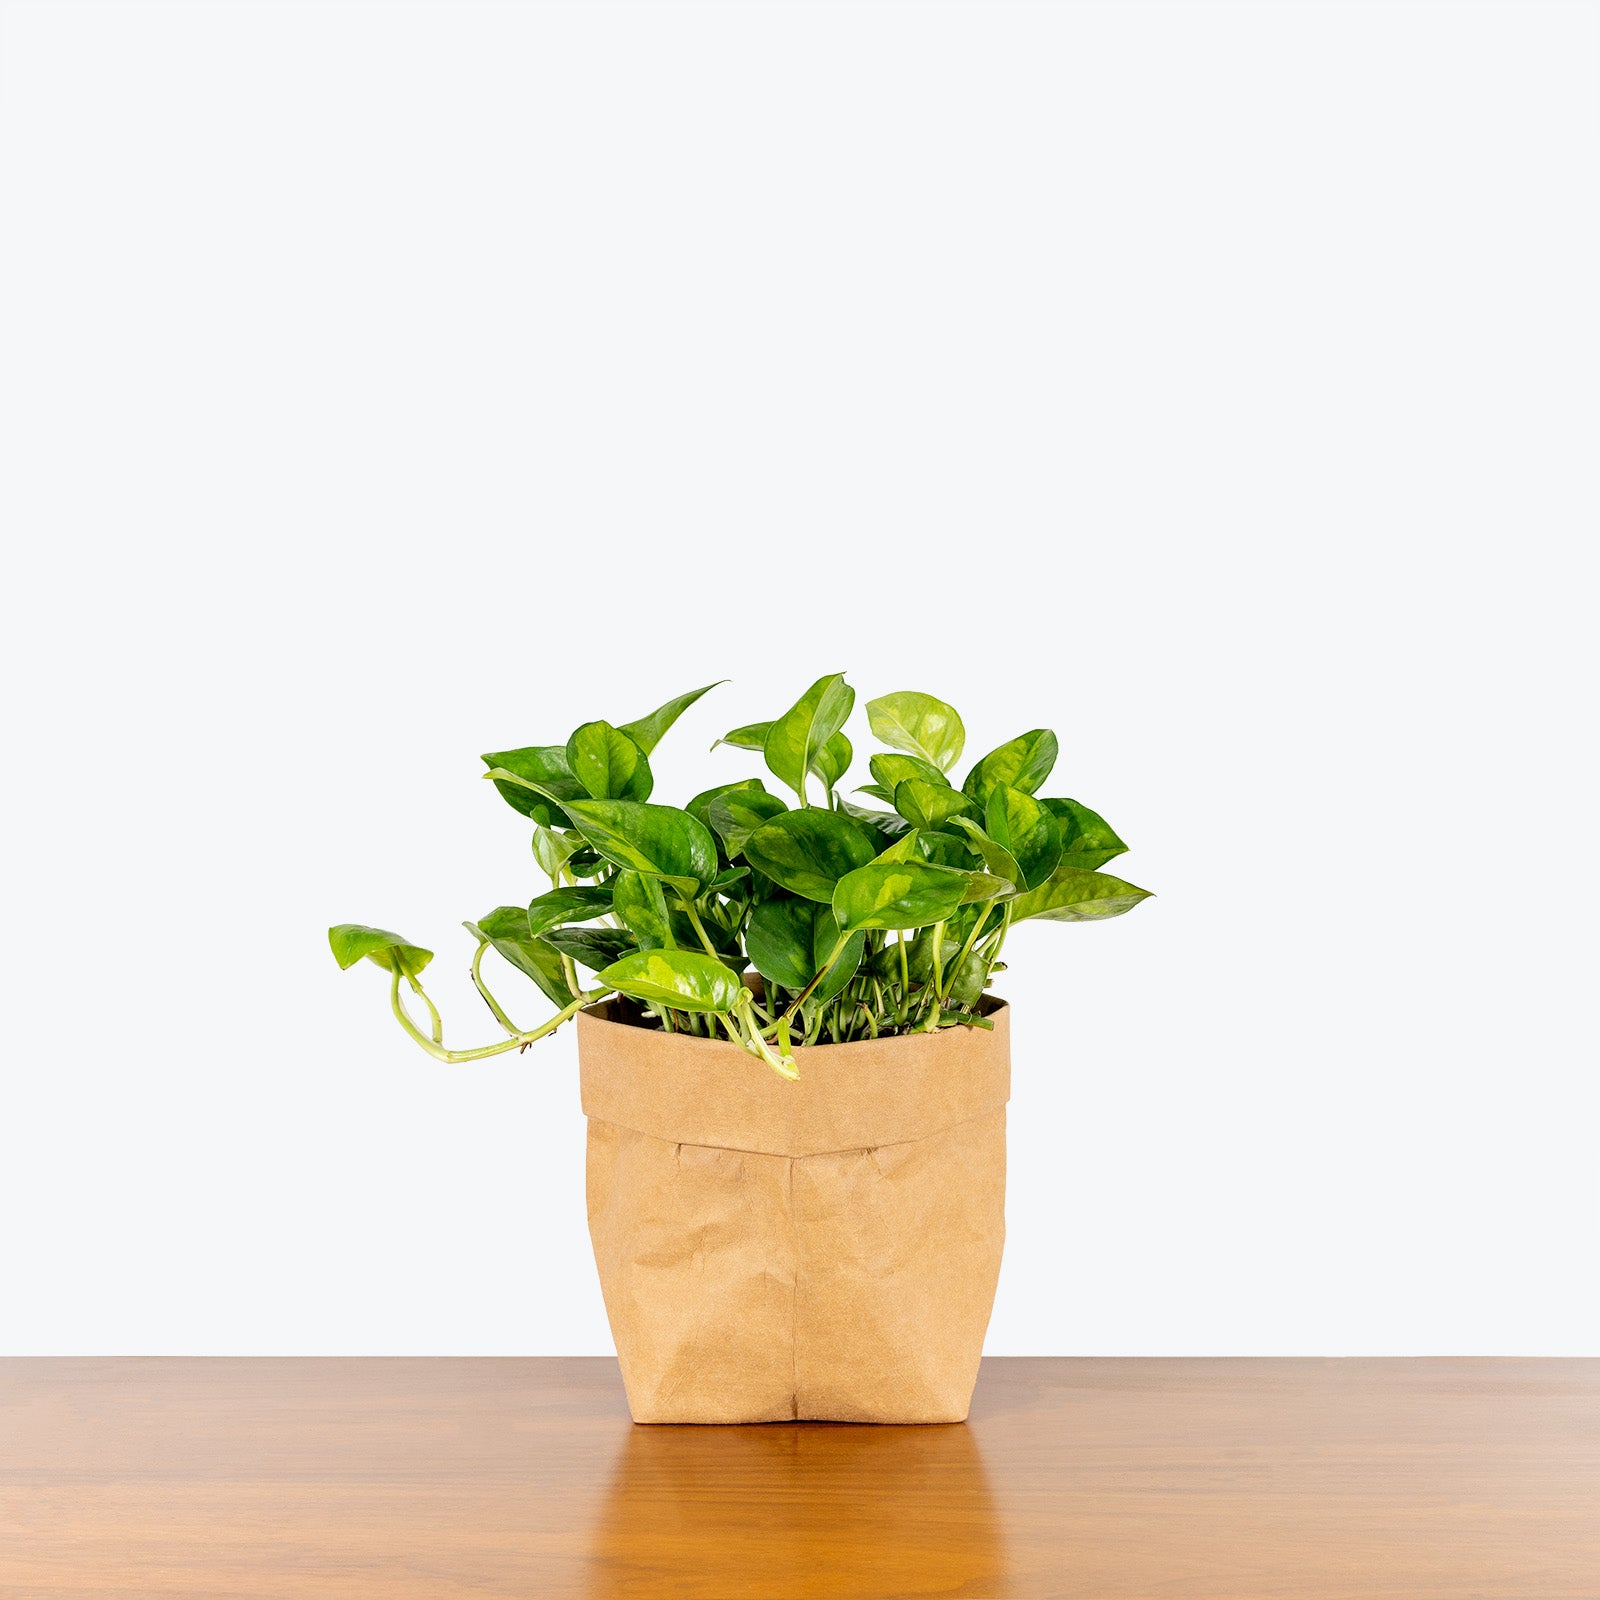 Pothos Plants for Sale, Popular Easy-Growing Houseplants